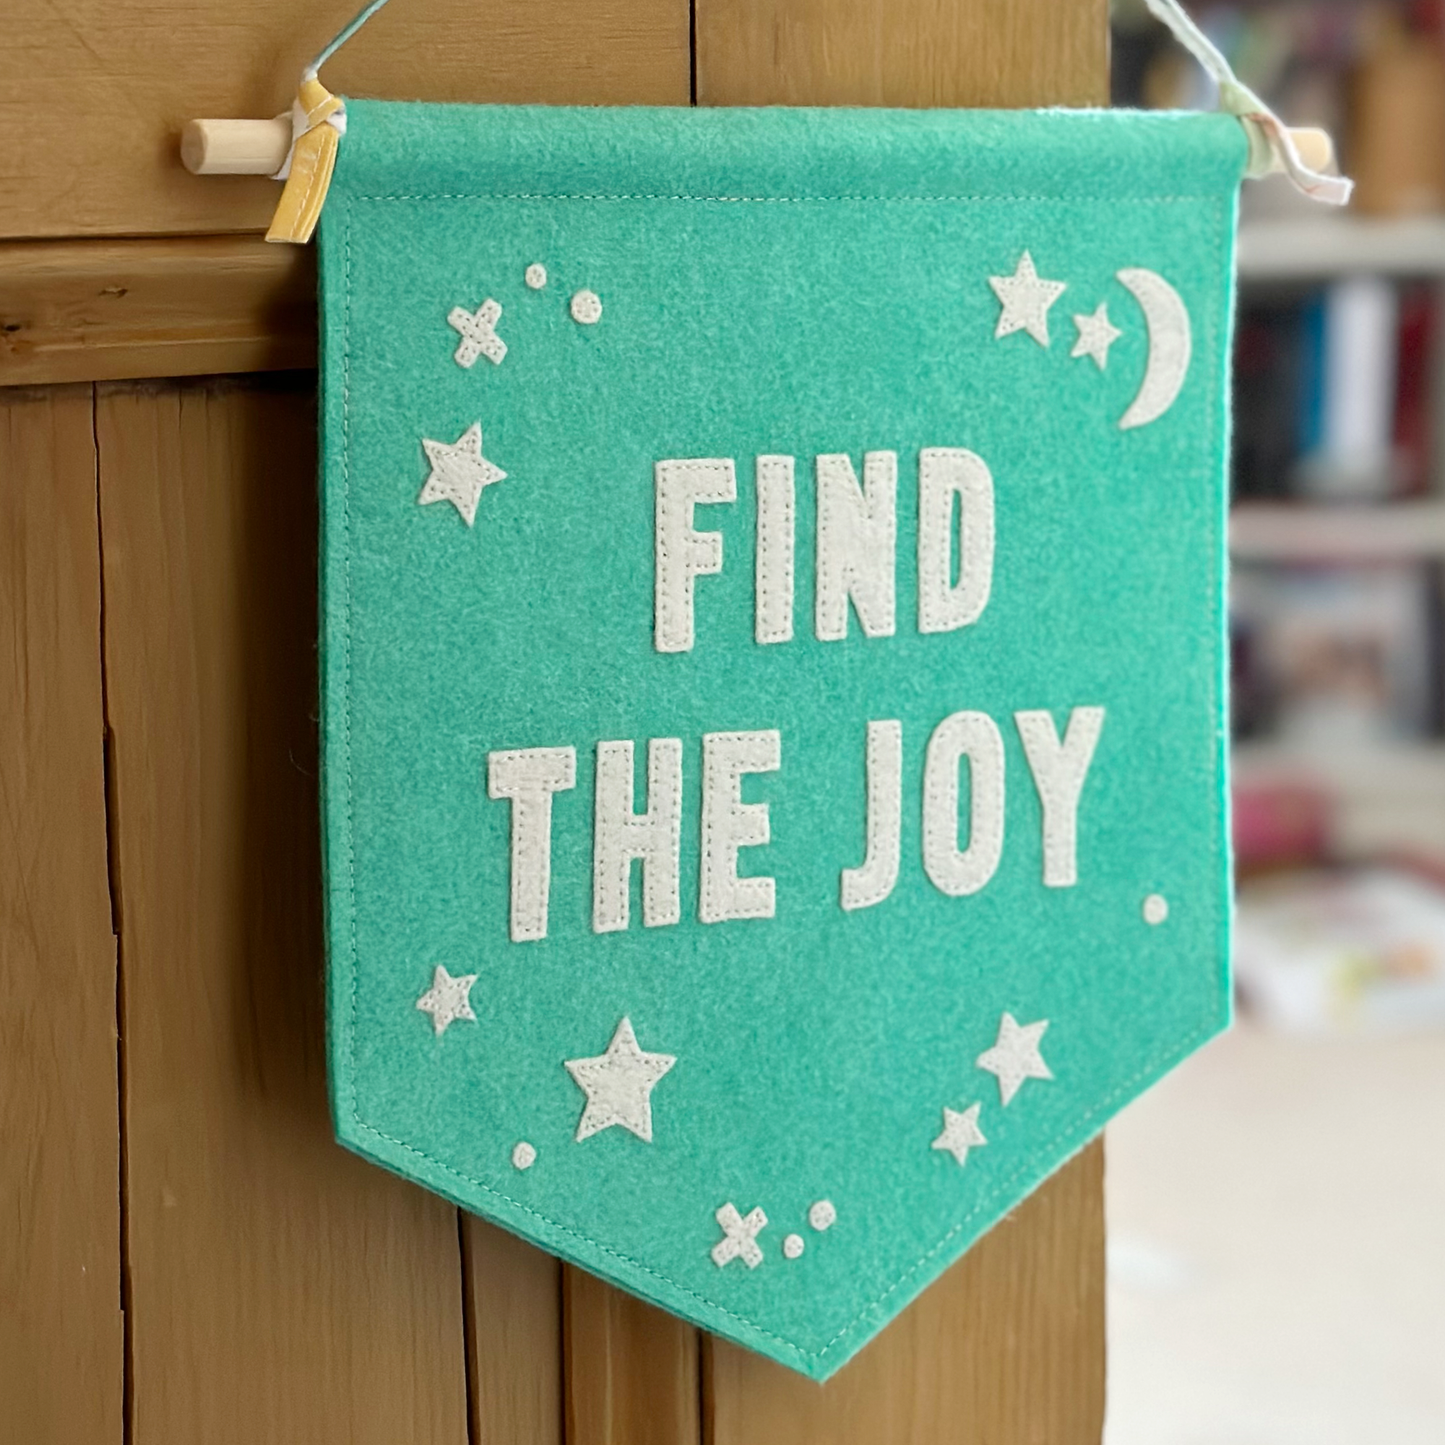 Find the Joy positivity banner craft kit